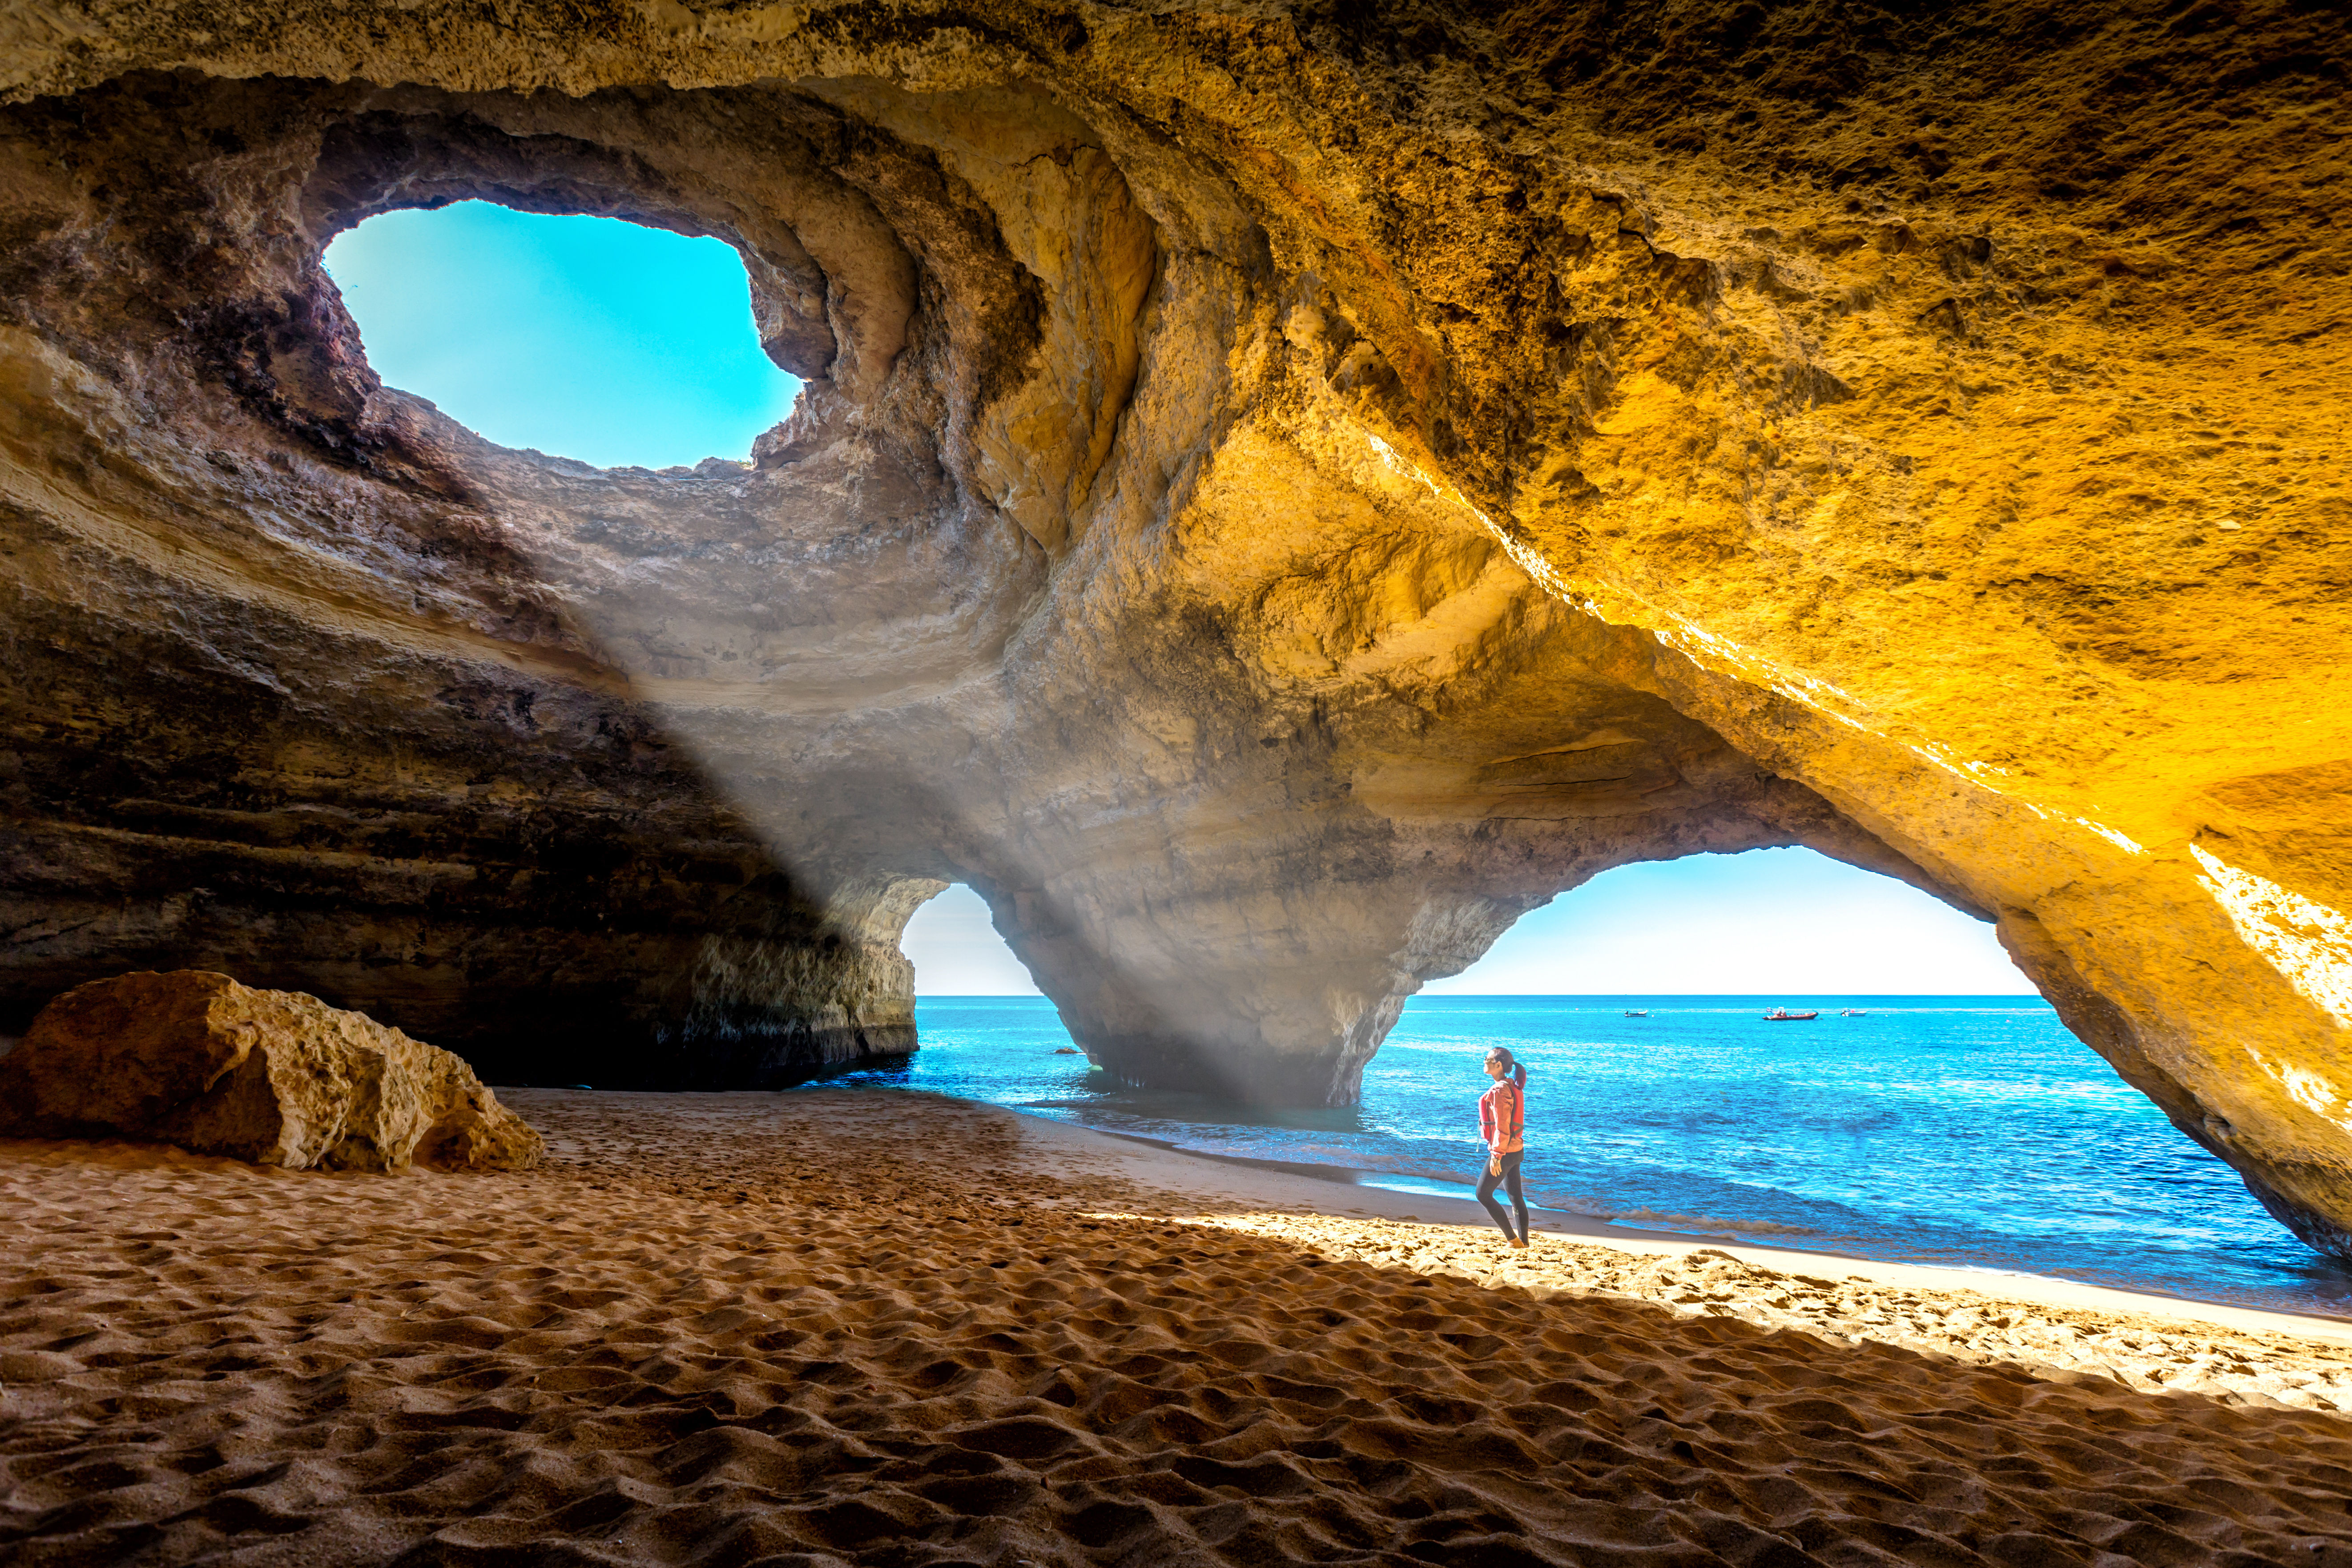 Amazing coastal caves in the Algarve region of Portugal